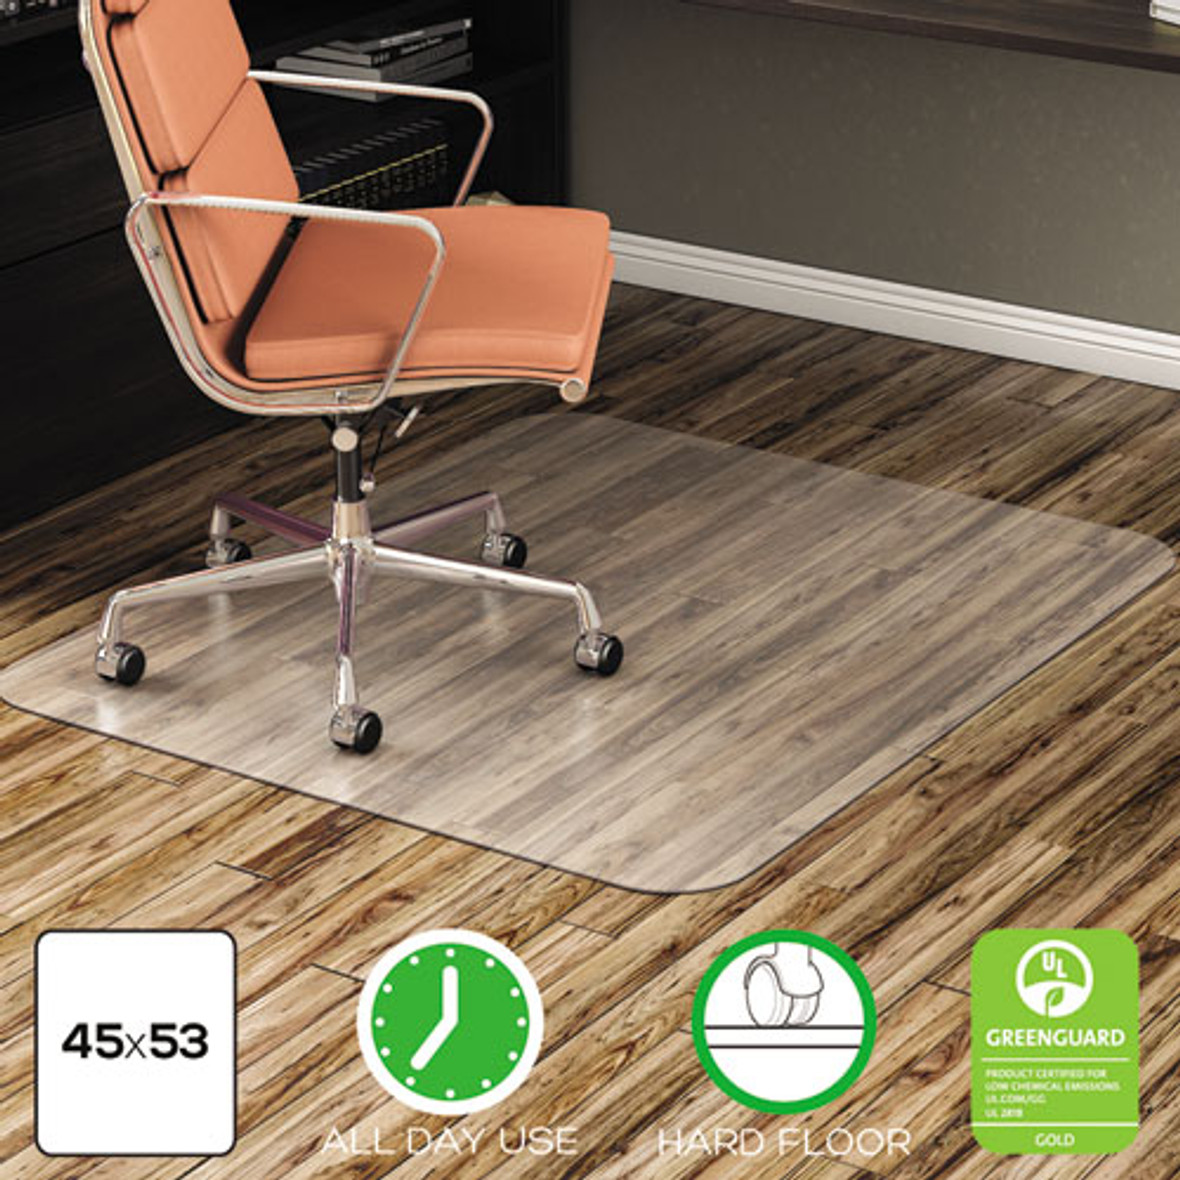 Deflecto® Economat All Day Use Chair Mat For Hard Floors, 45 x 53, Rectangular, Clear, 1 Each/Carton